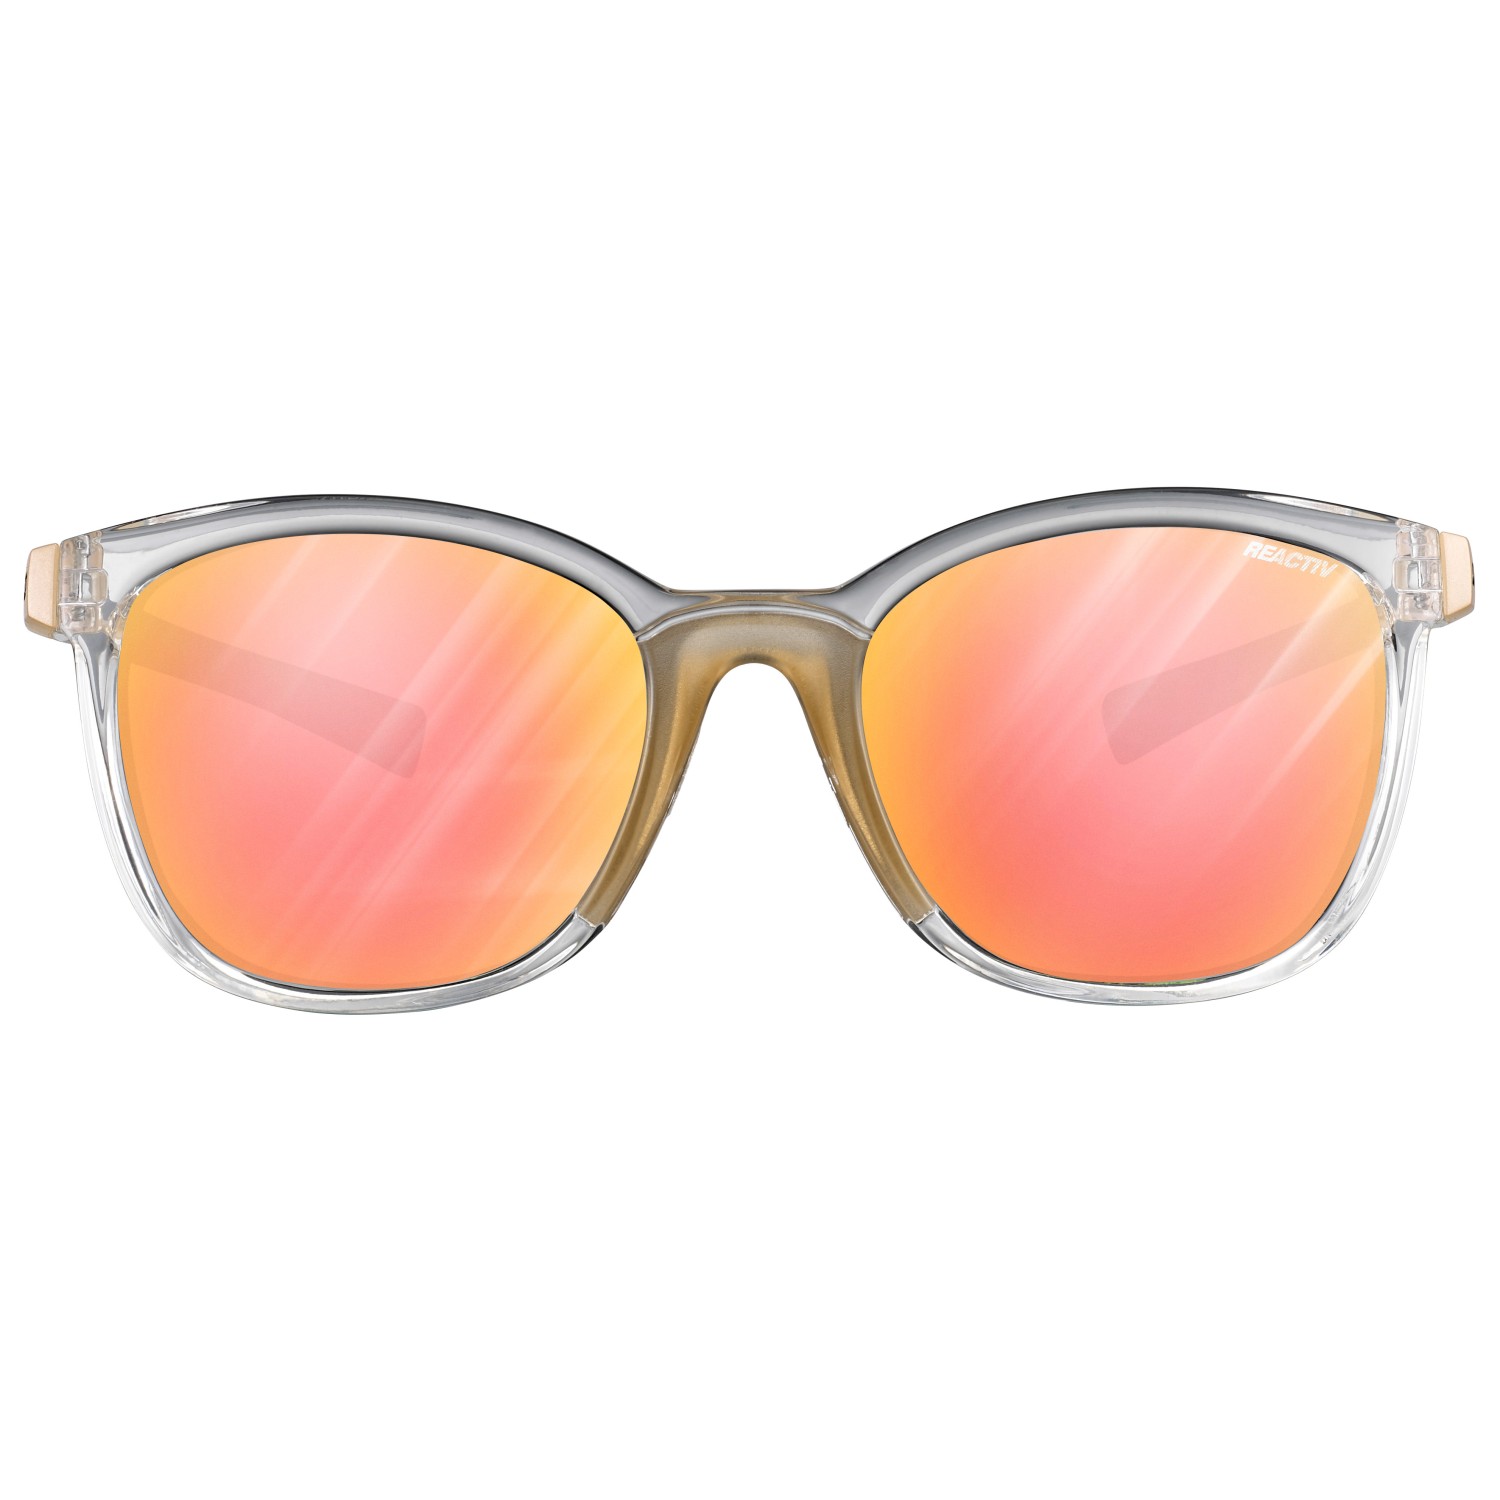 Солнцезащитные очки Julbo Spark Reactiv S1 3 Glare Control (VLT 9 20%), цвет Crystal/Grey arena очки nimesis crystal m